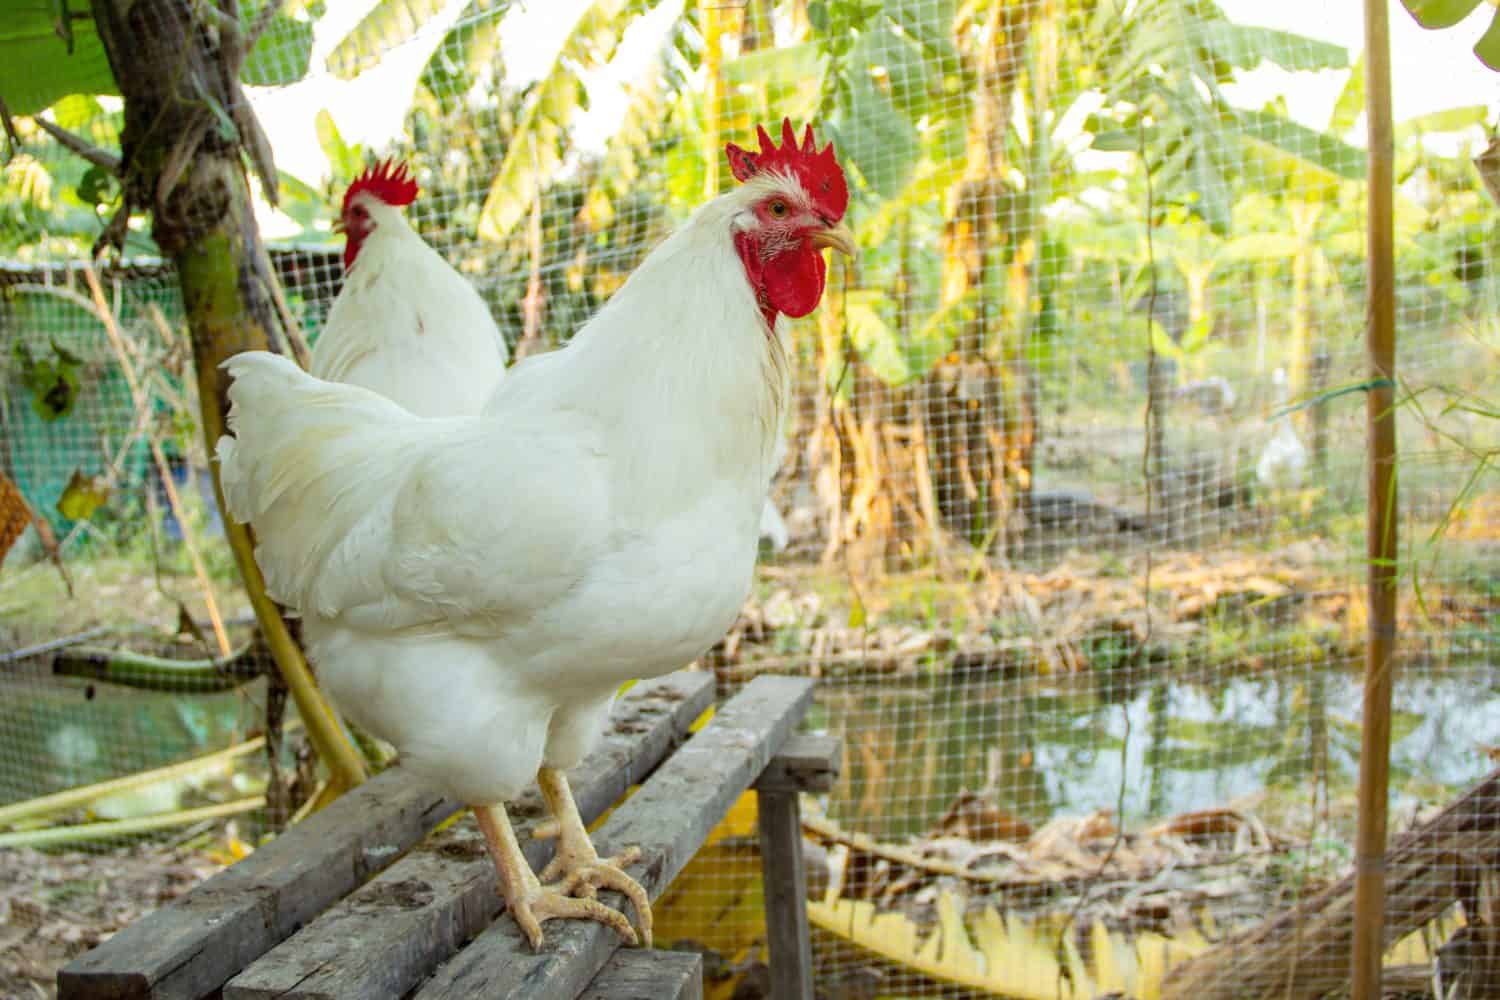 Rhode Island White rooster england species in free range husbandry natural animal in backyard lifestyle farming garden organic.